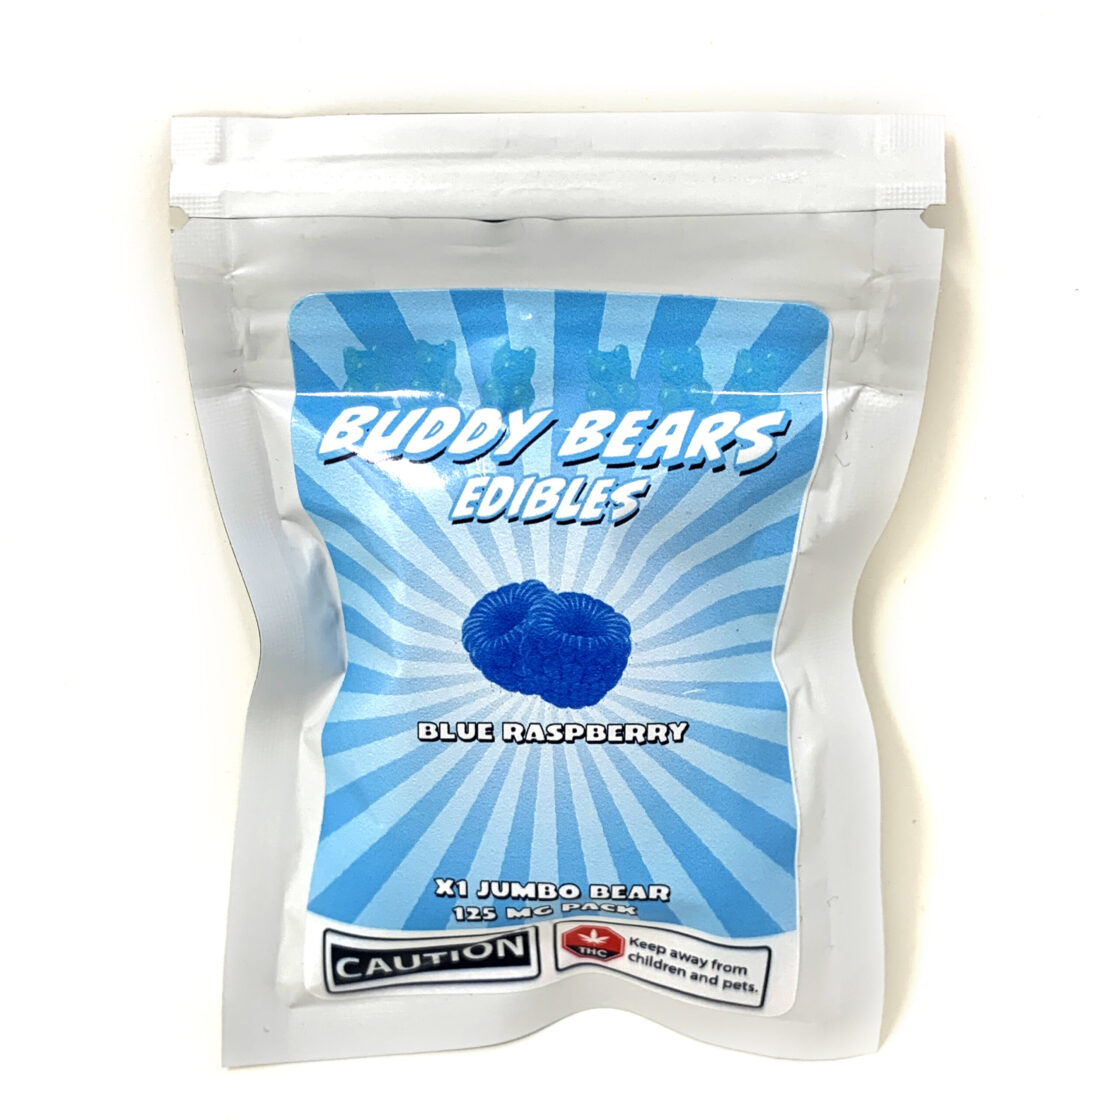 Buddy Bears – Blue Raspberry (1pc)